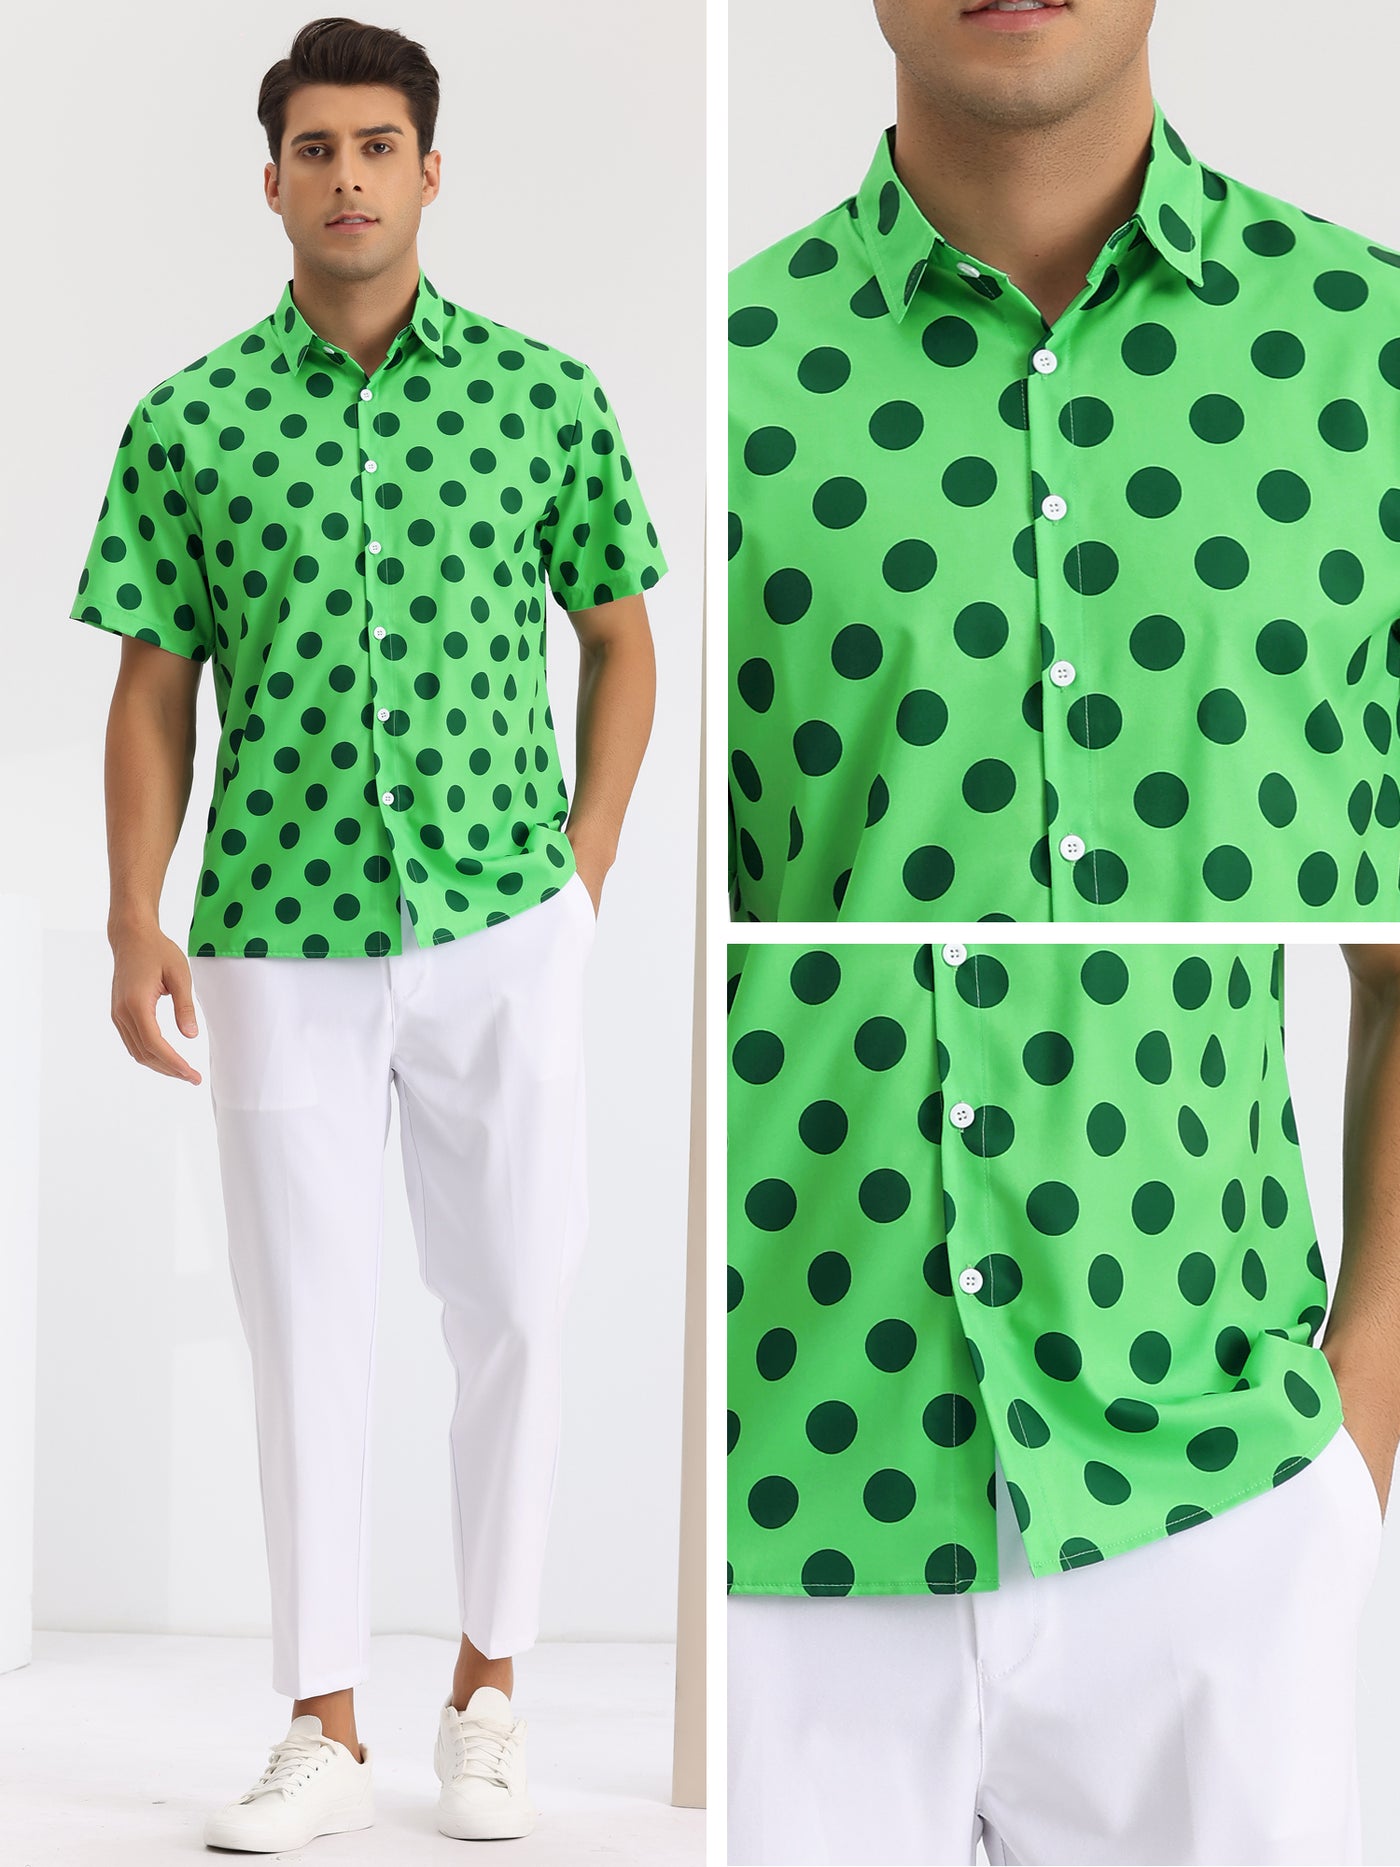 Bublédon Summer Polka Dots Shirts for Men's Short Sleeves Color Block Beach Shirt